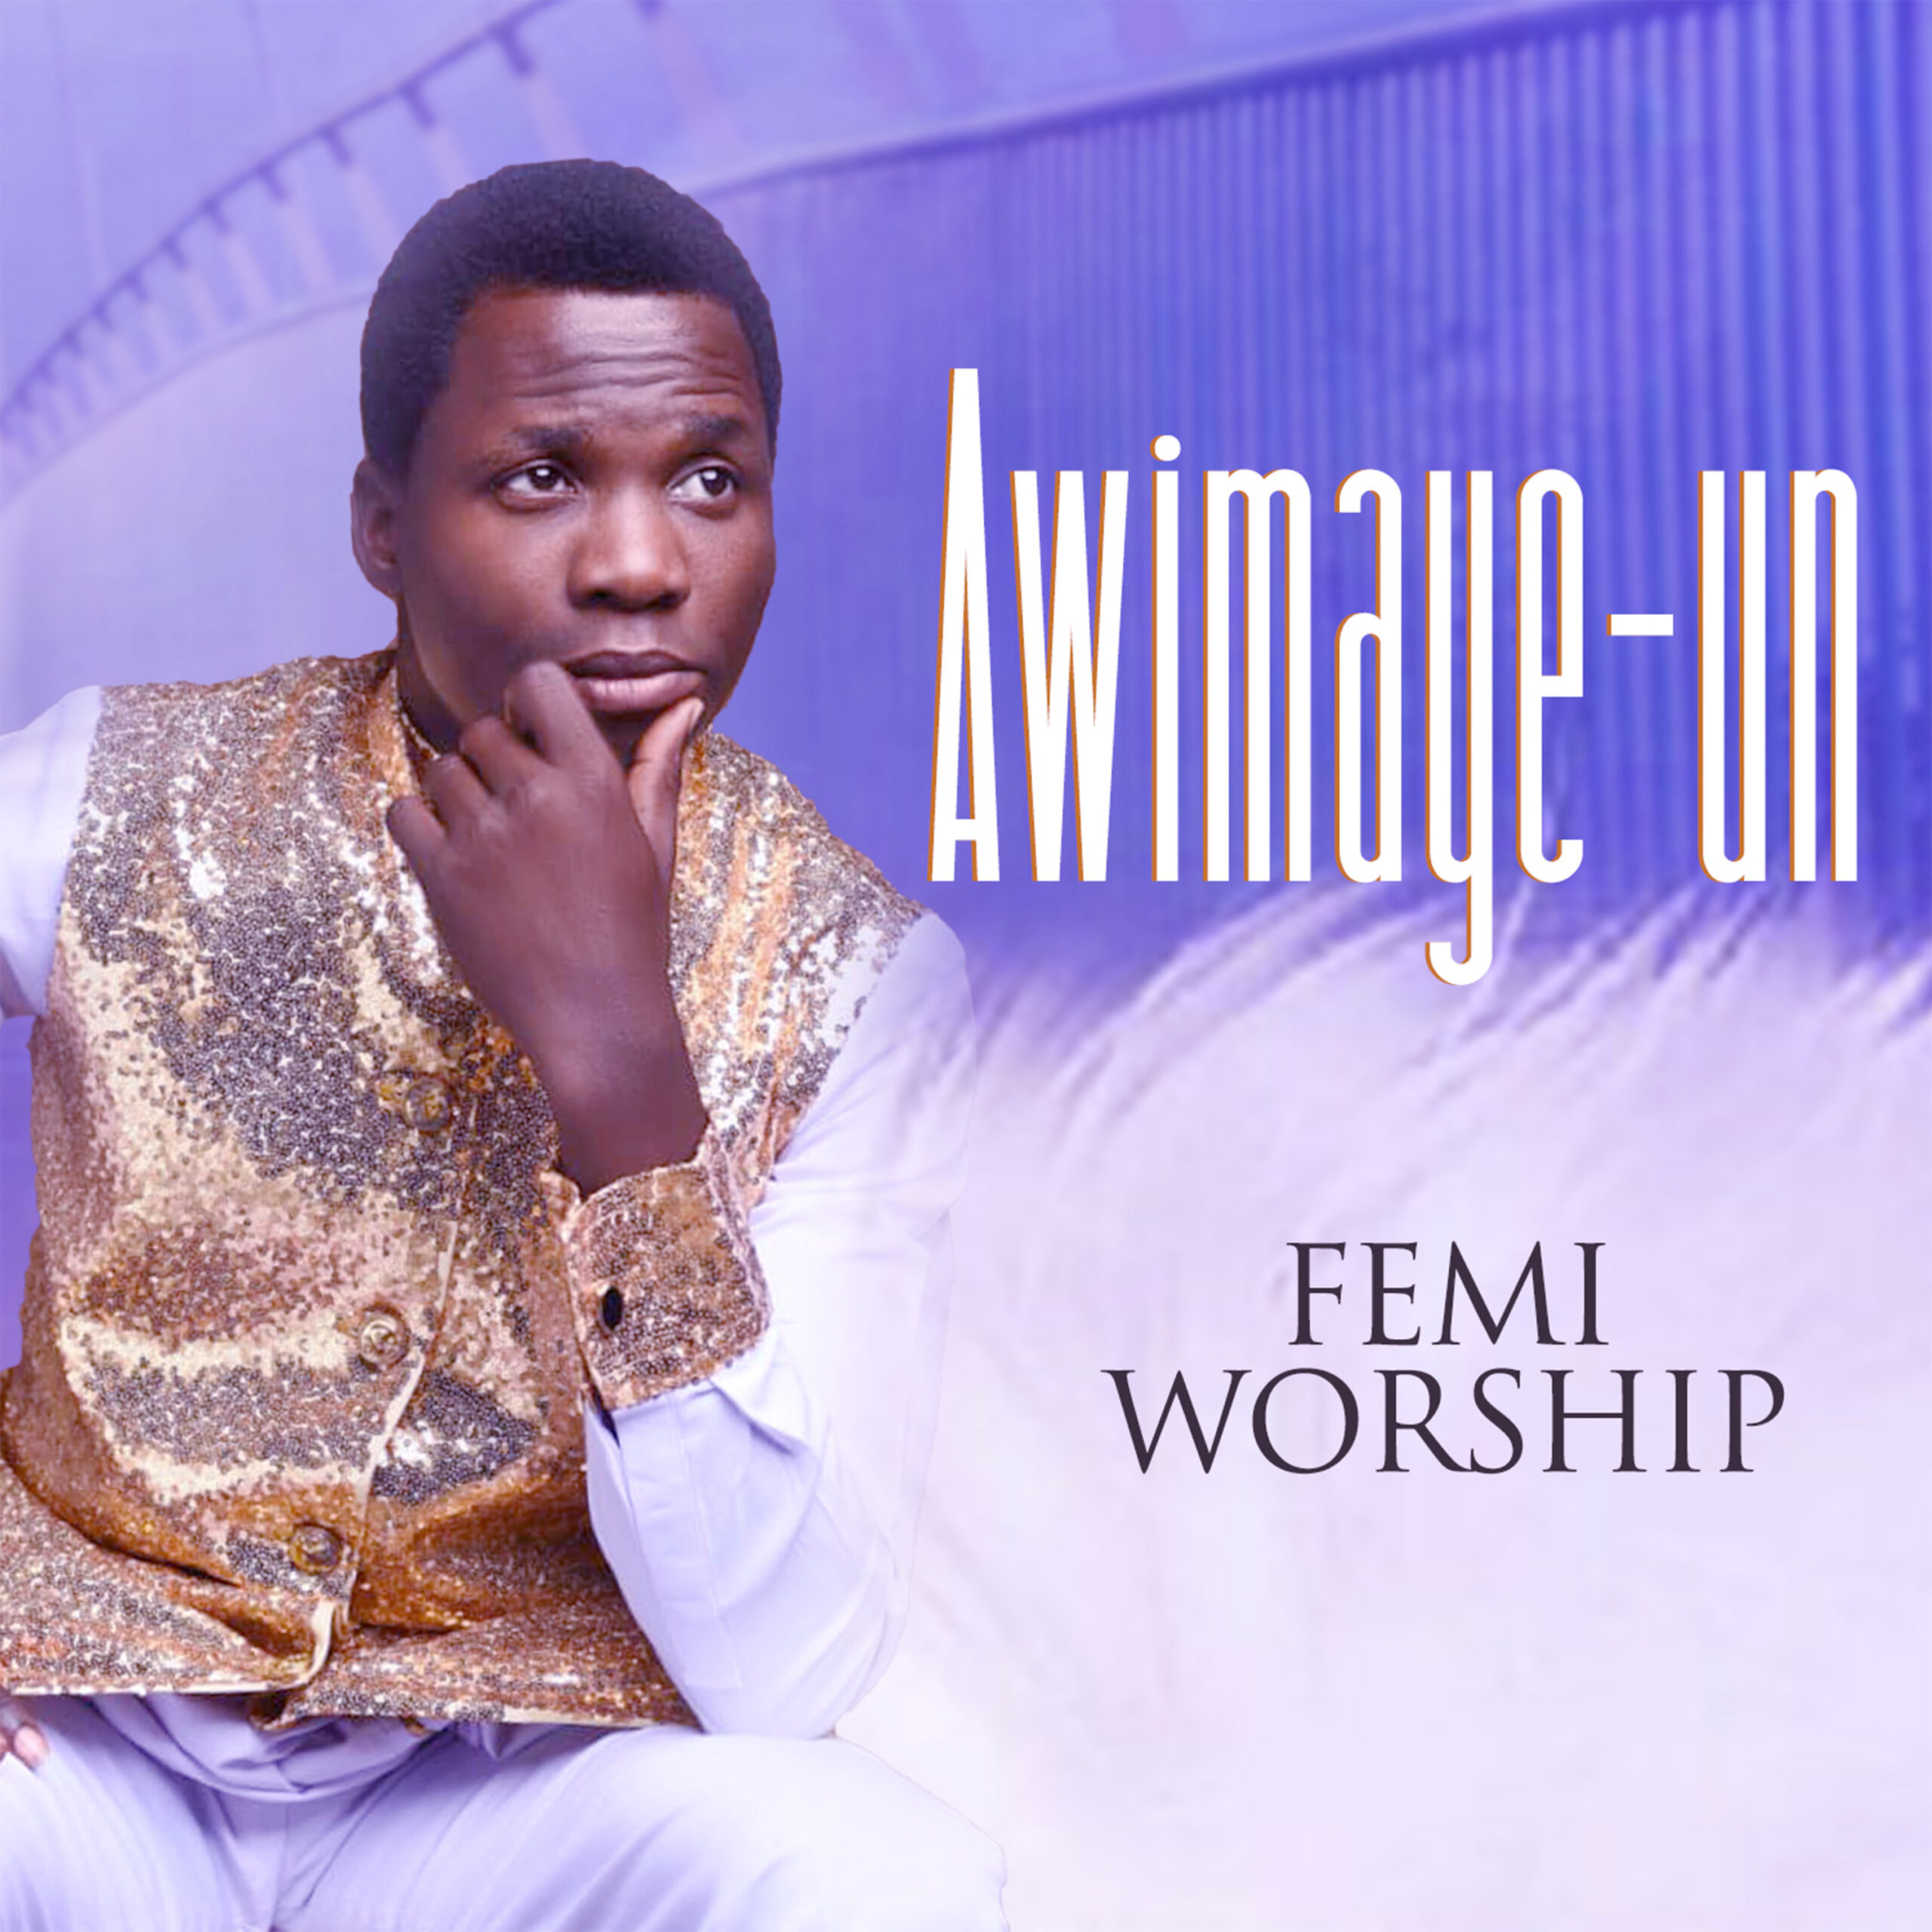 DOWNLOAD Mp3: Femi Worship - Awimaye-un